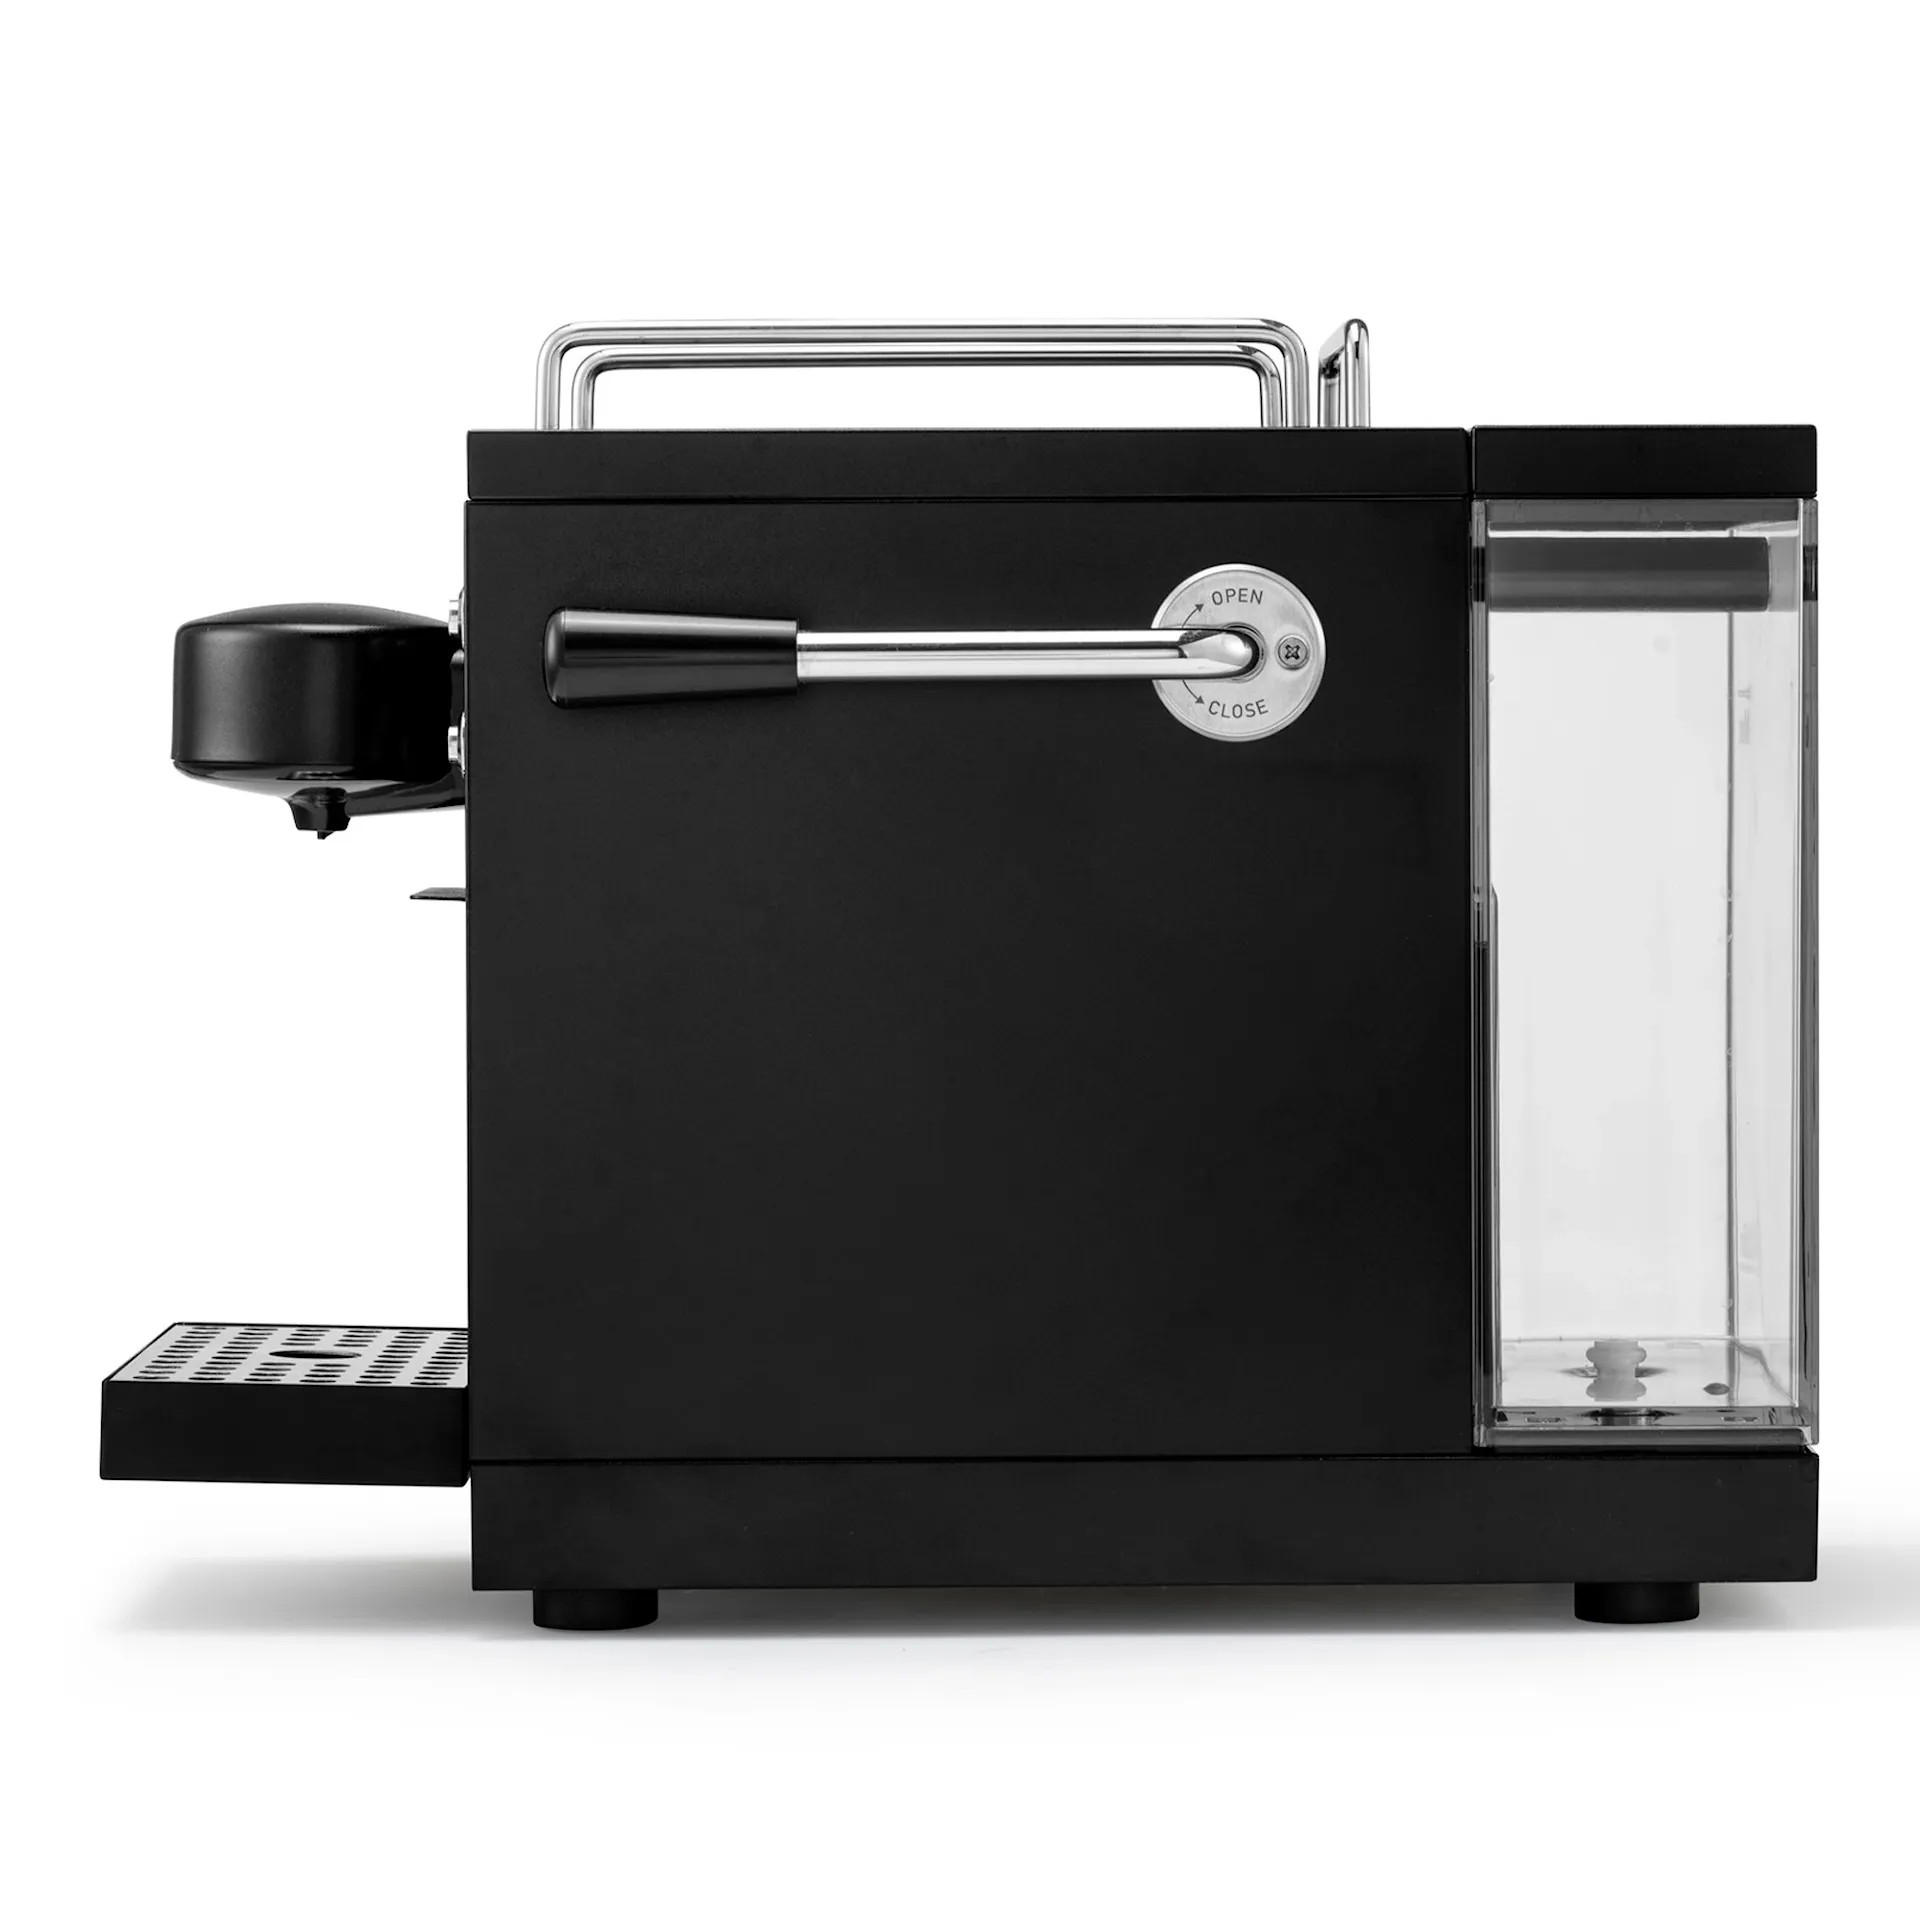 The Original - Espresso Capsule Machine, Svart + Milk Frother + Coffee Capsusle 40 st - Sjöstrand Coffee Concept - NO GA